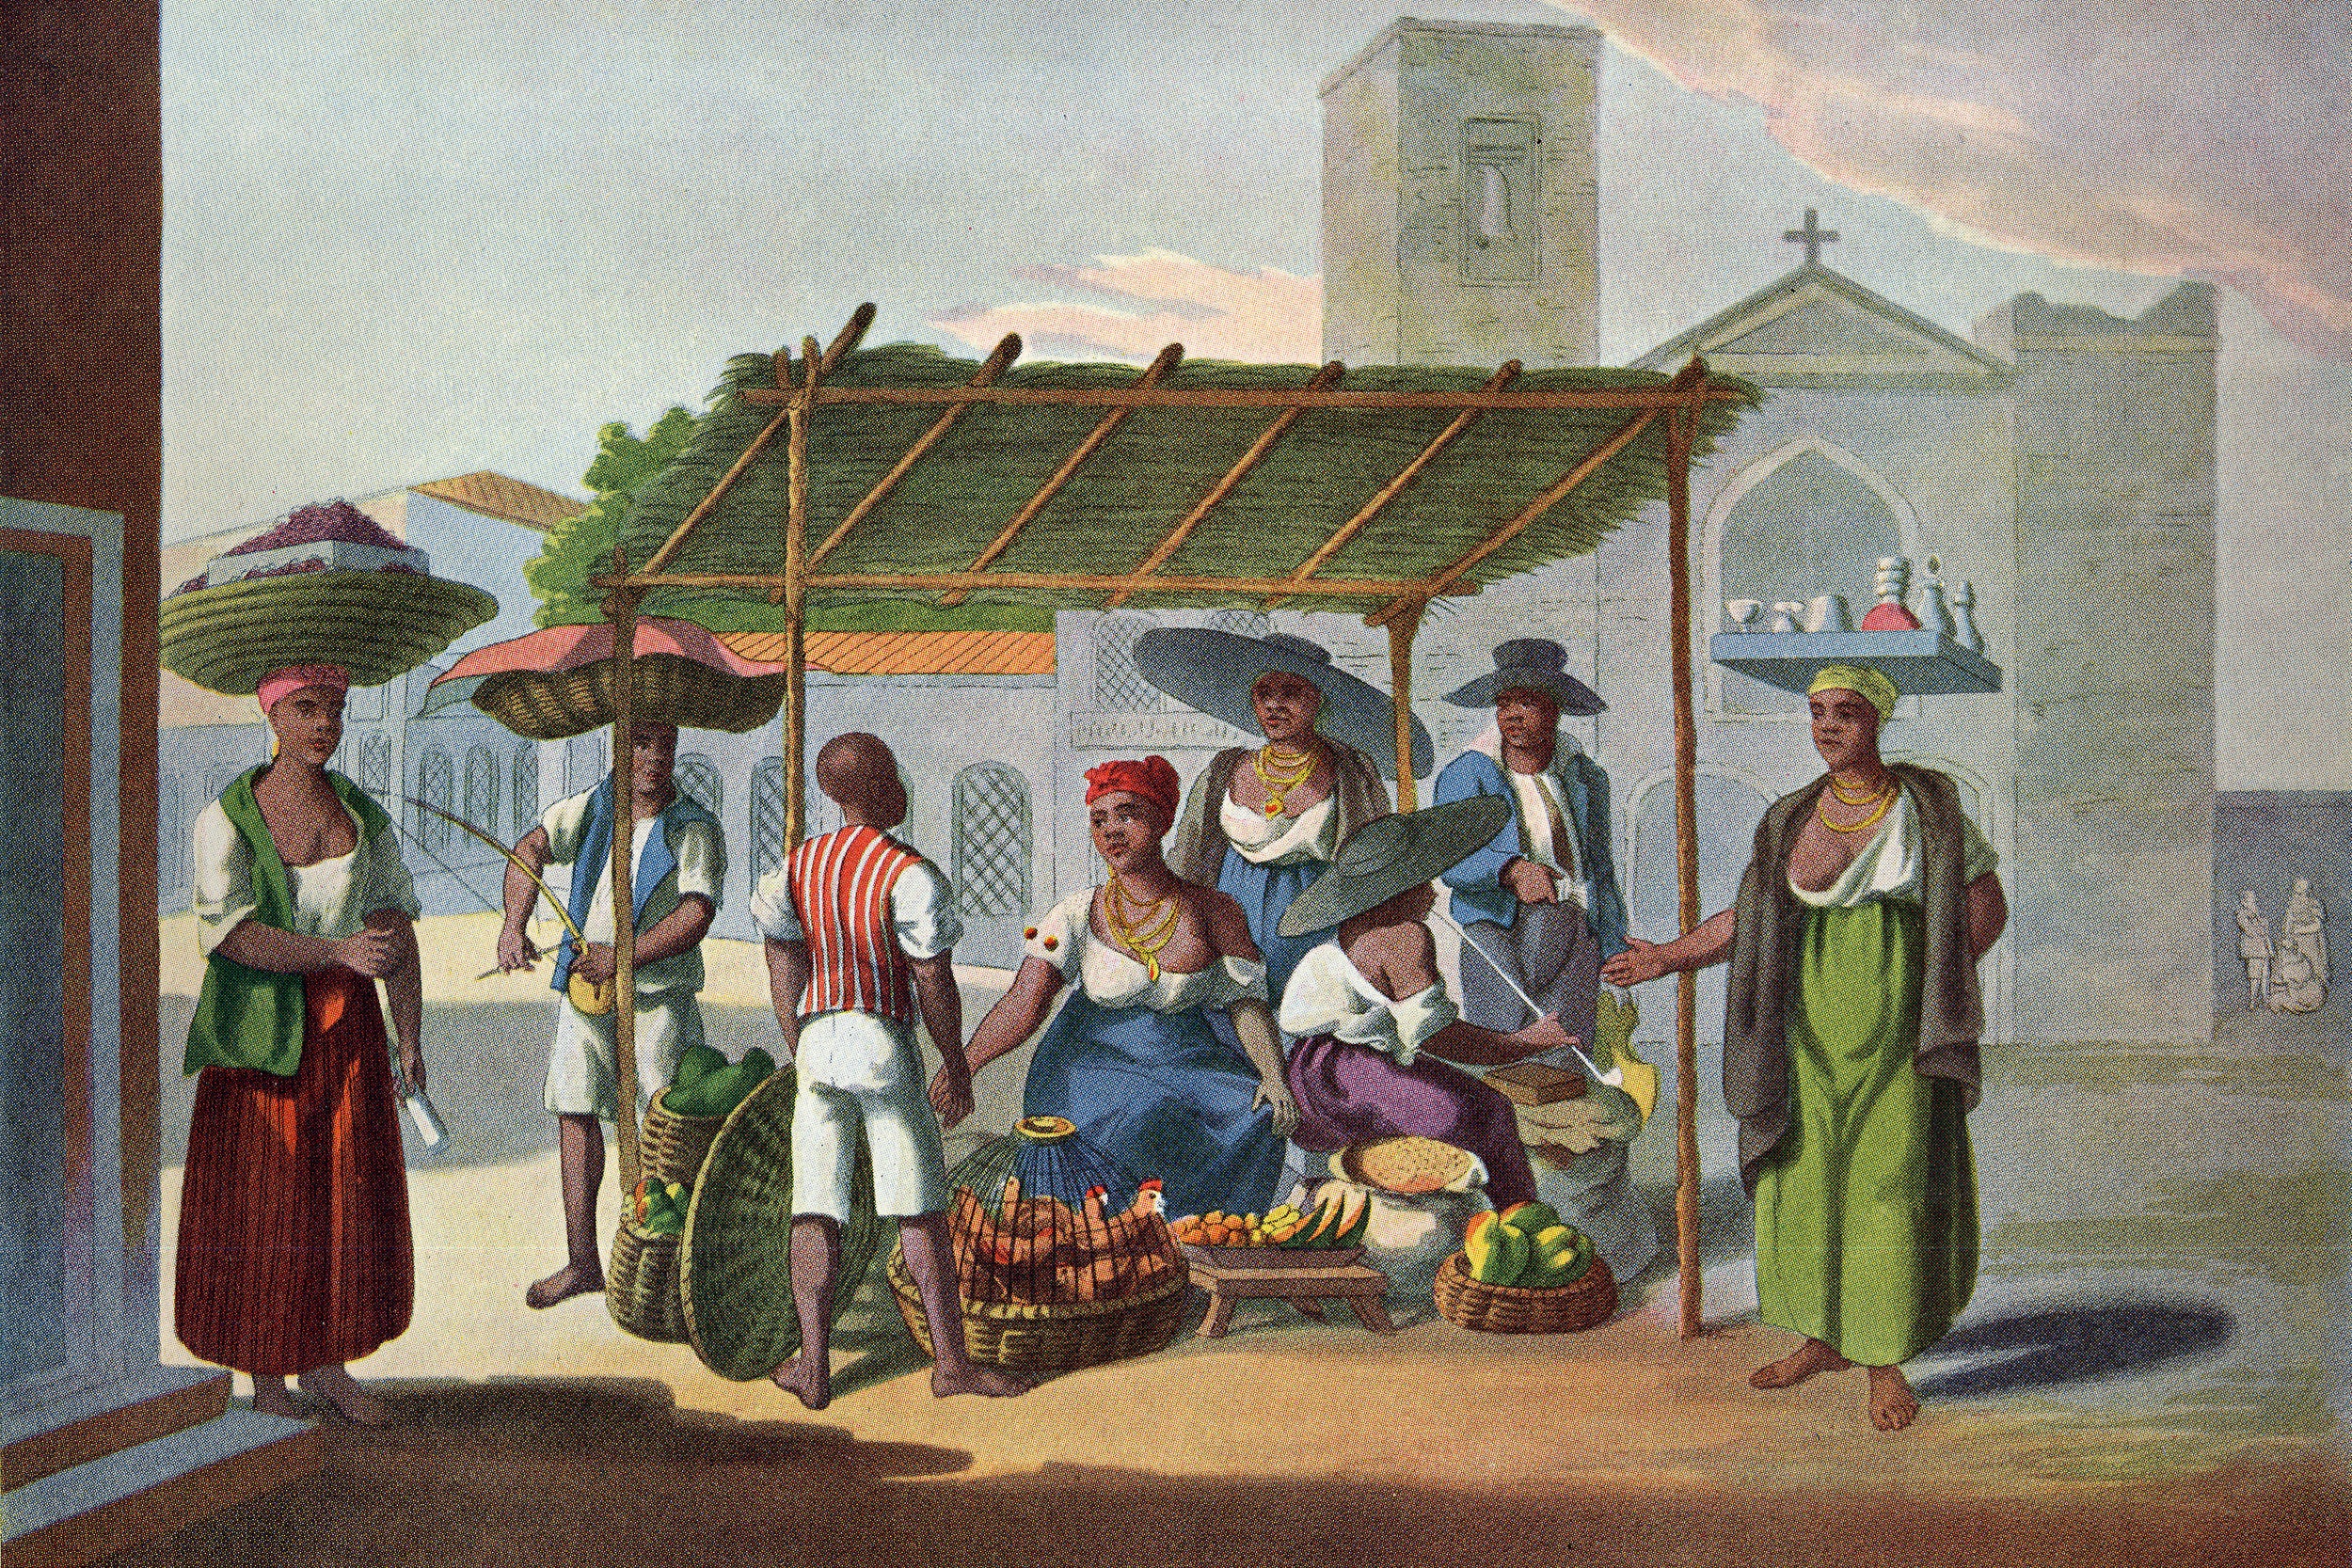 "Market Stall and Market Women, Rio de Janeiro, Brazil, 1819-1820"